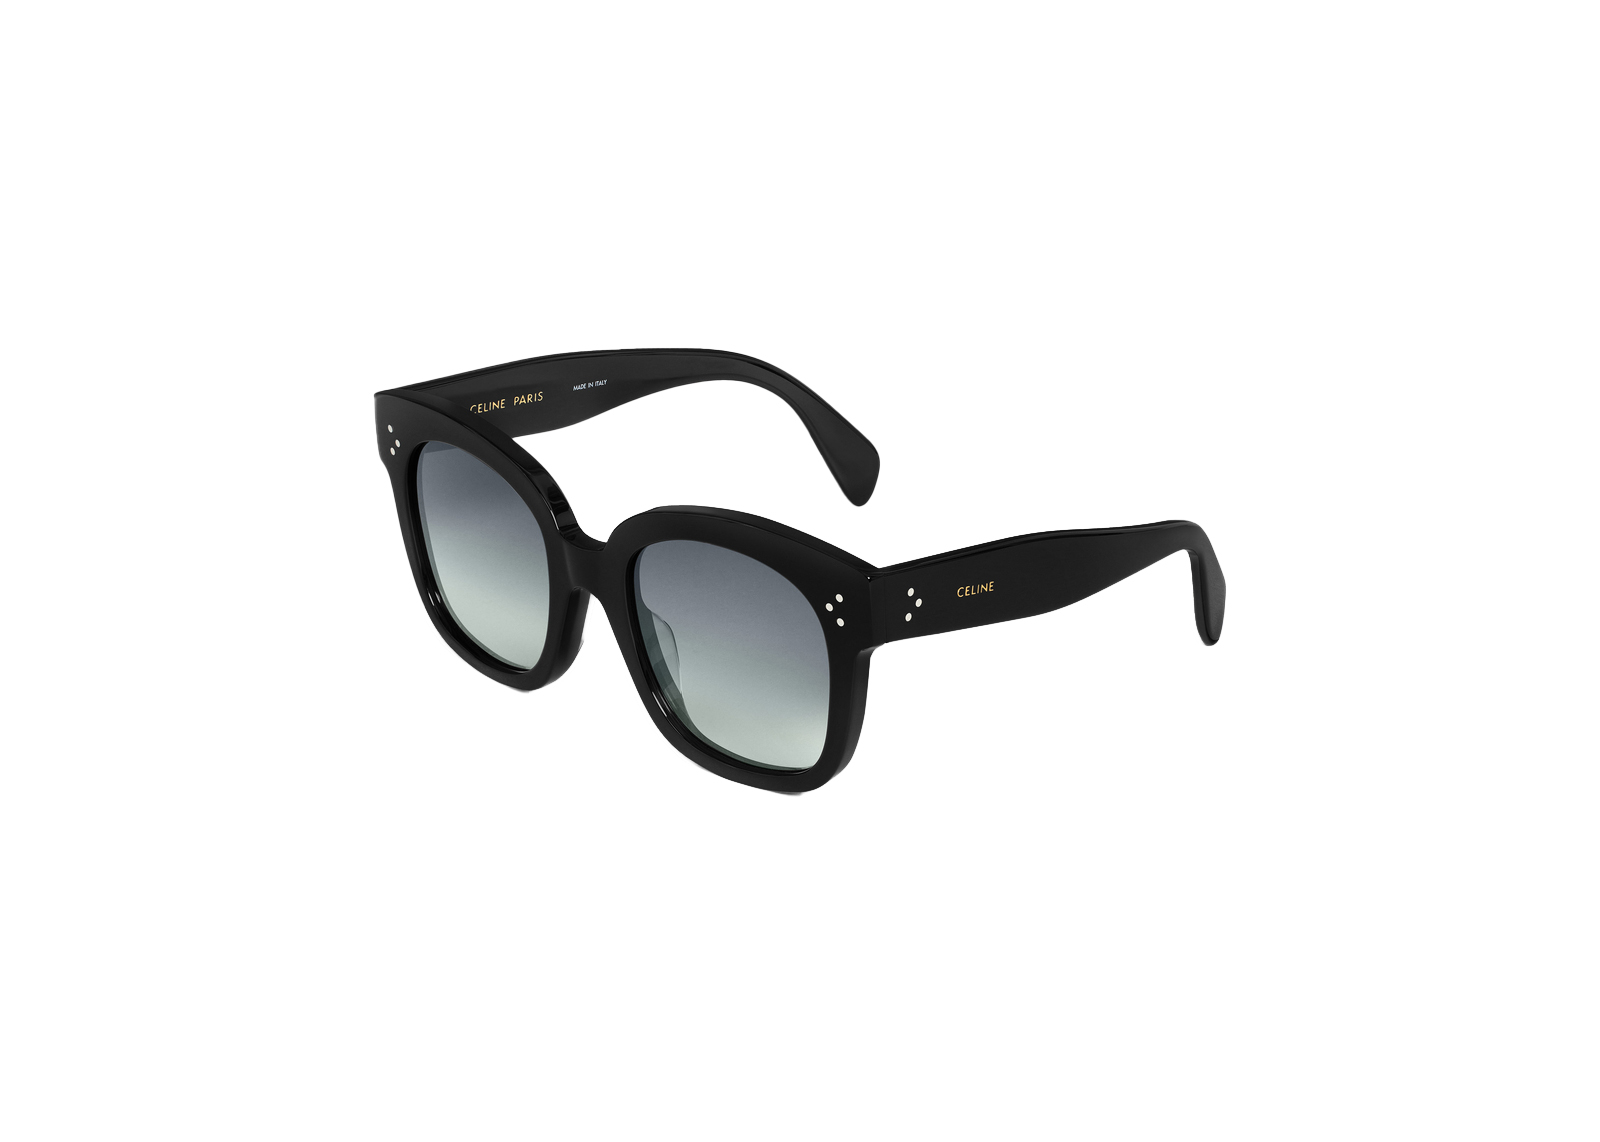 CELINE EYEWEAR D-frame acetate sunglasses | NET-A-PORTER